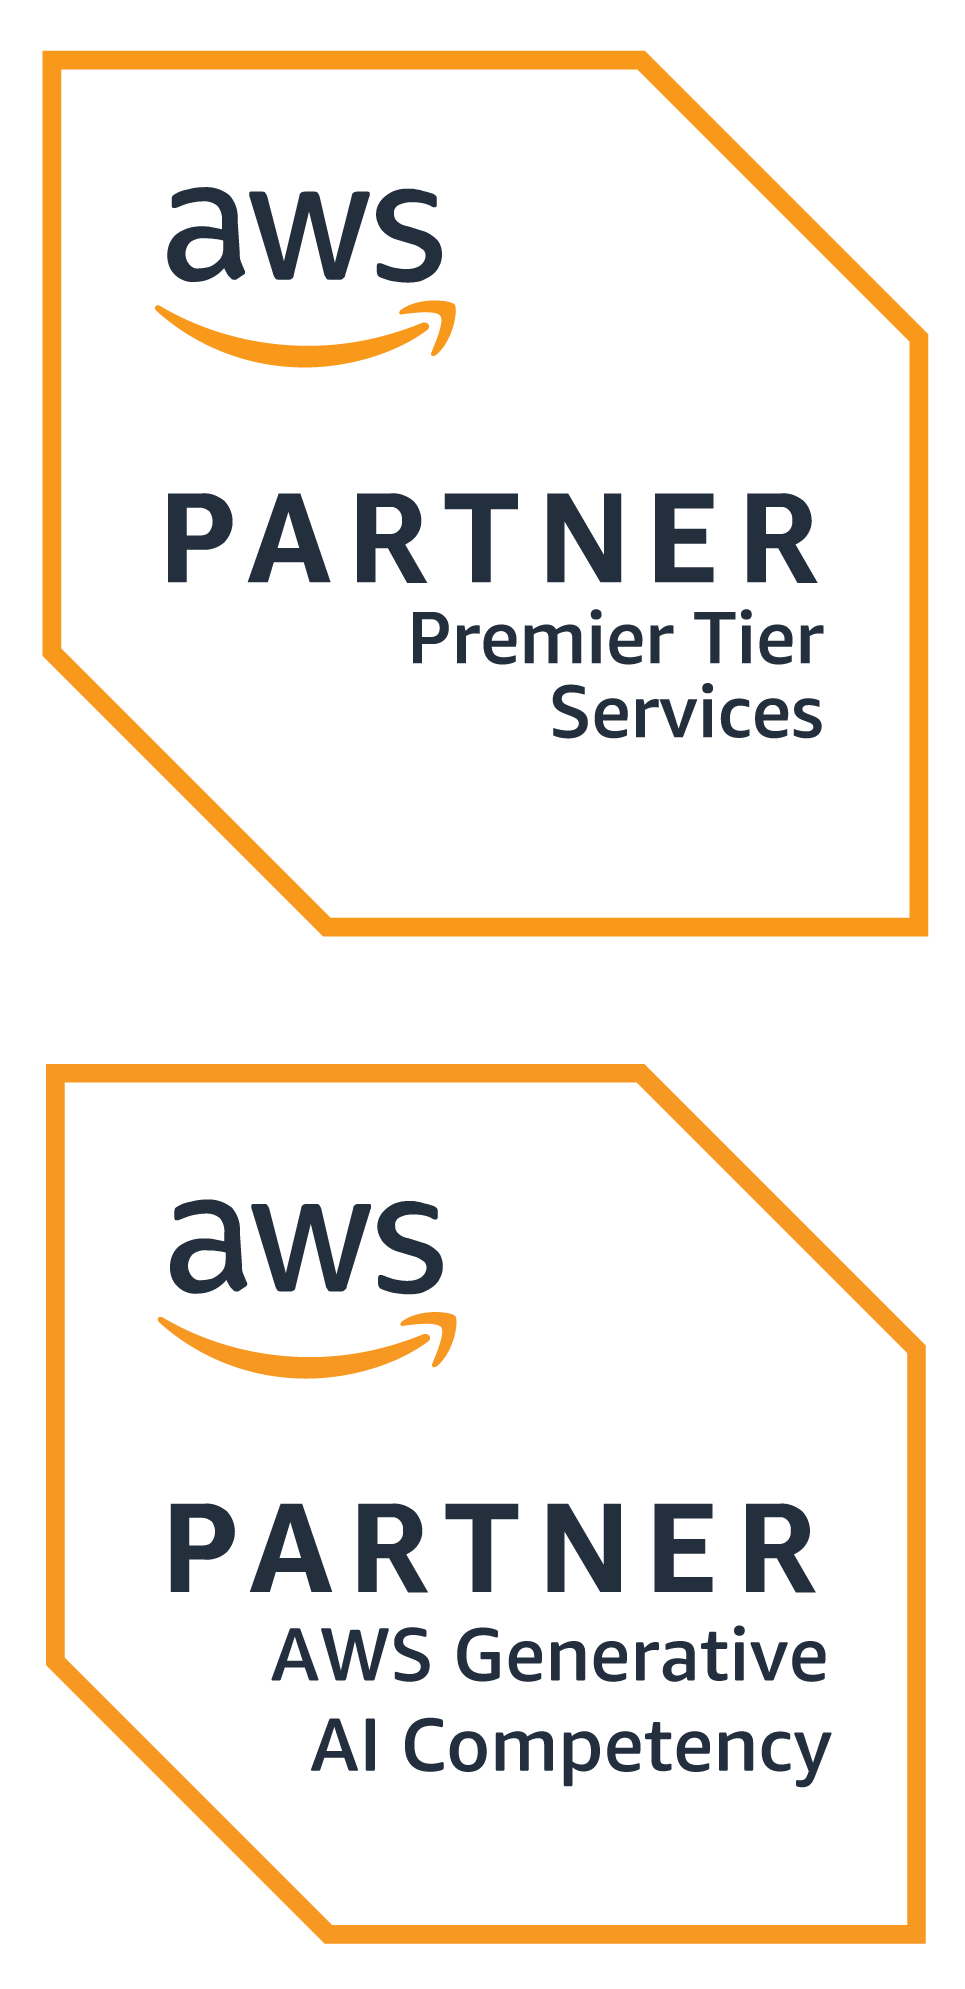 AWS Premier Partner and AWS GenAI Competency